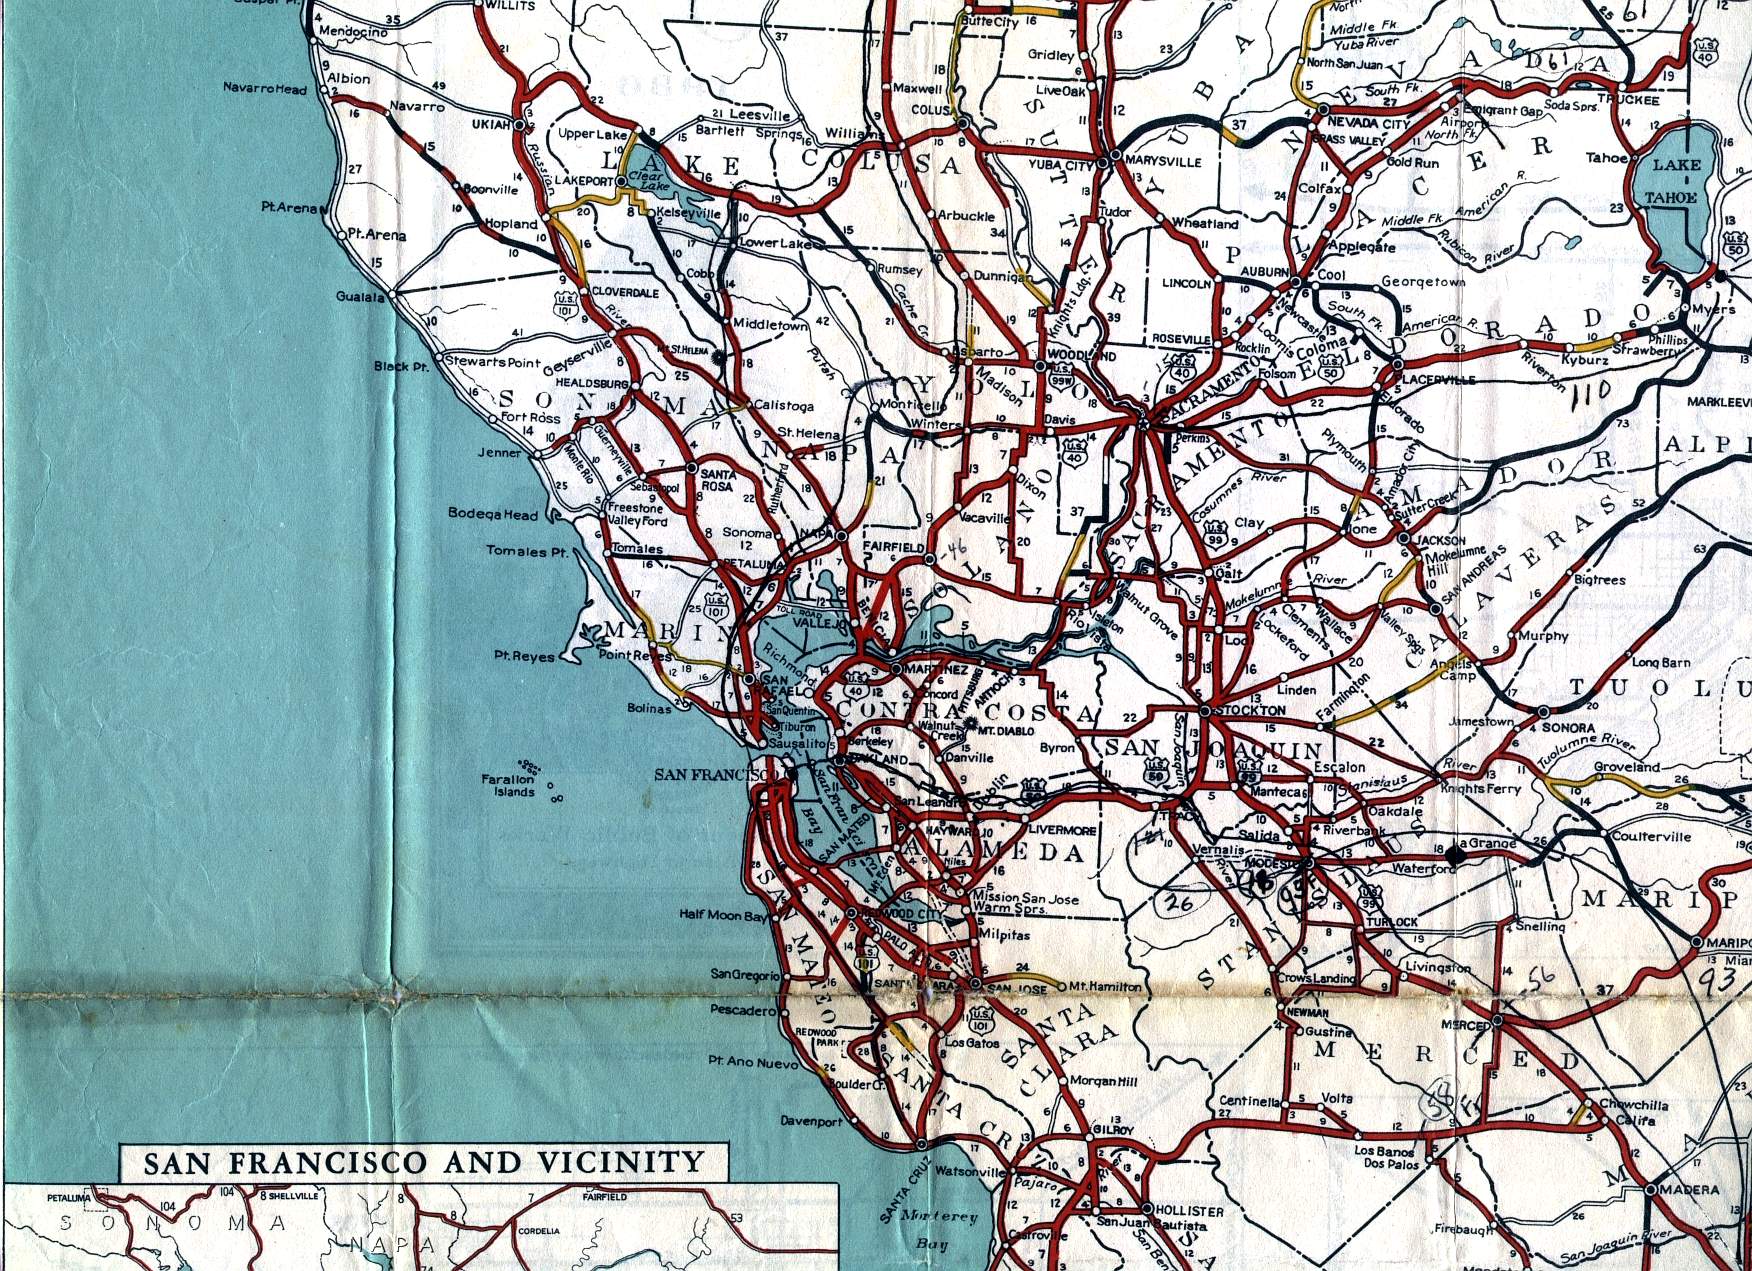 Bay Area, Sacramento, Lake Tahoe, on 1936 California official highway map